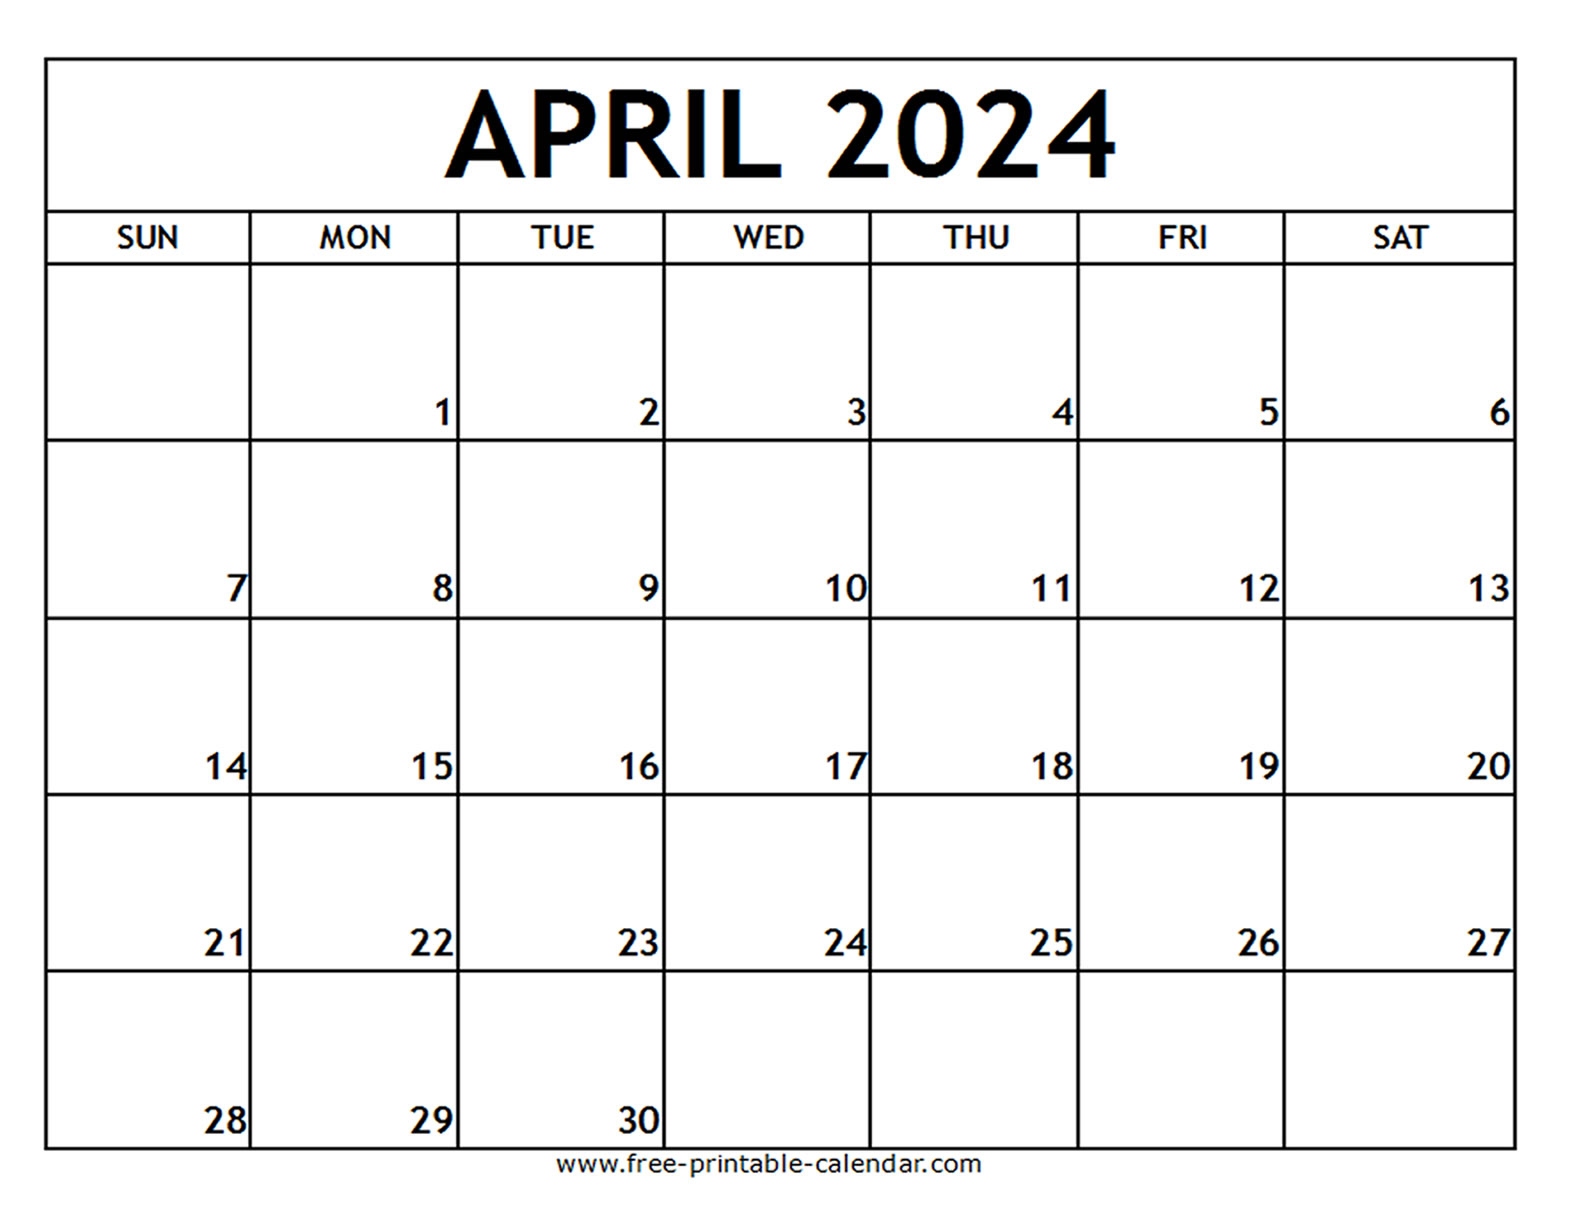 April 2024 Printable Calendar - Free-Printable-Calendar inside Free Printable April May 2024 Calendar